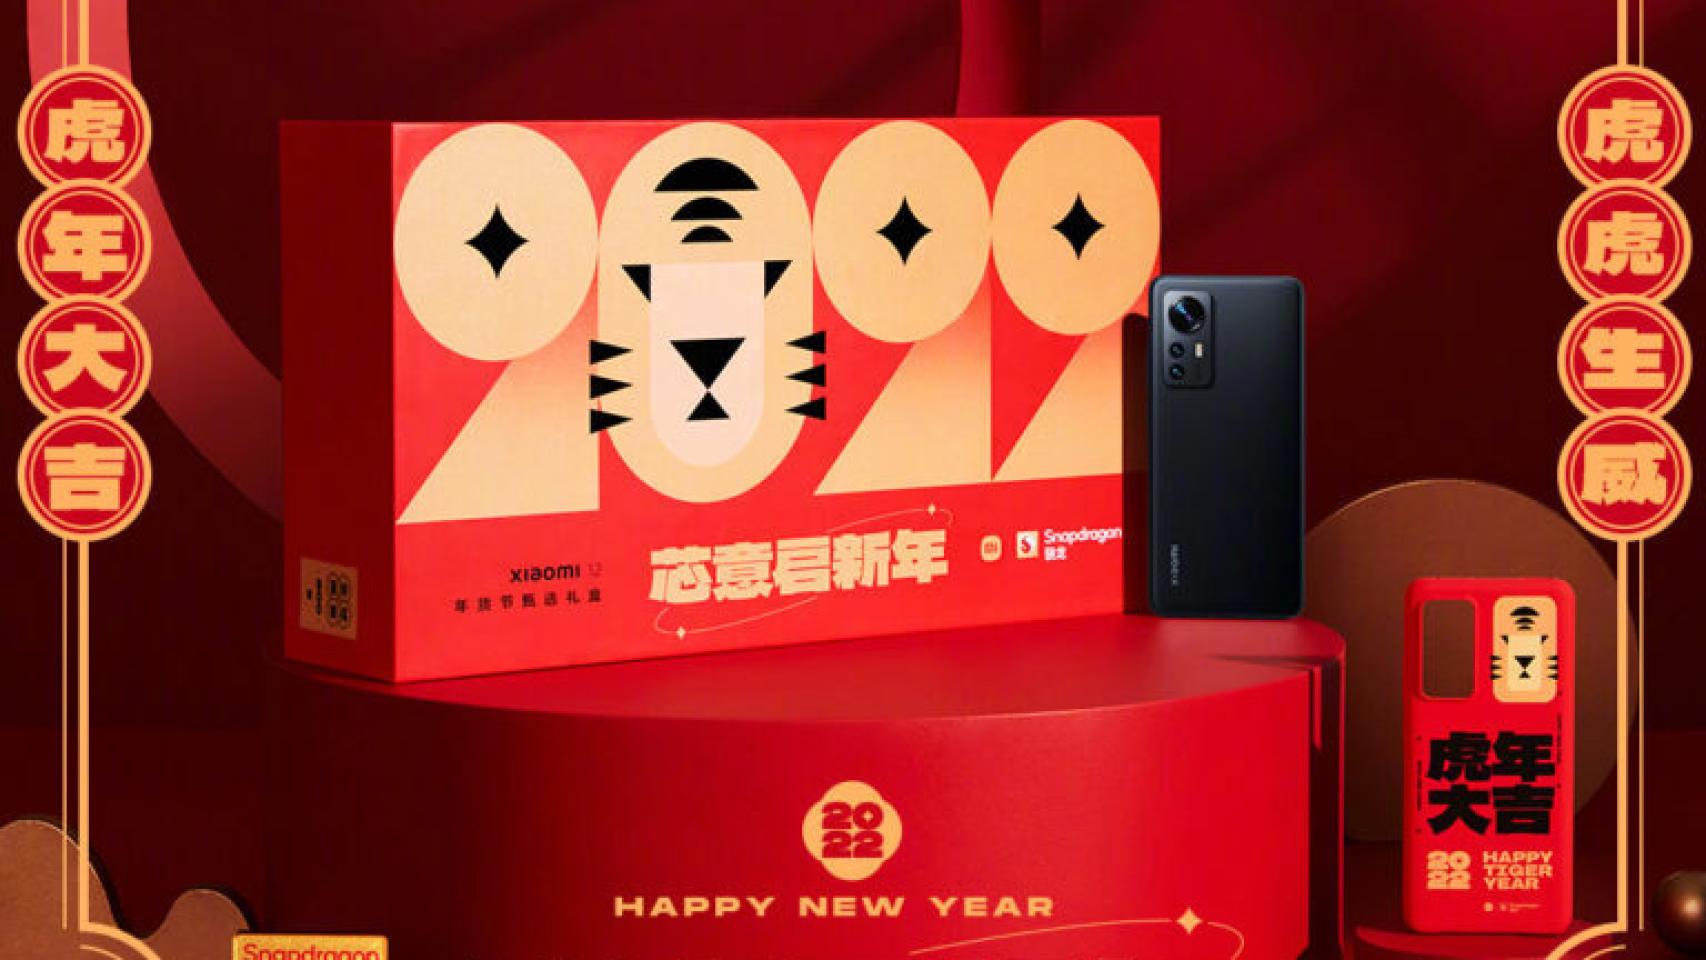 Xiaomi 12 New Year Edition cartel